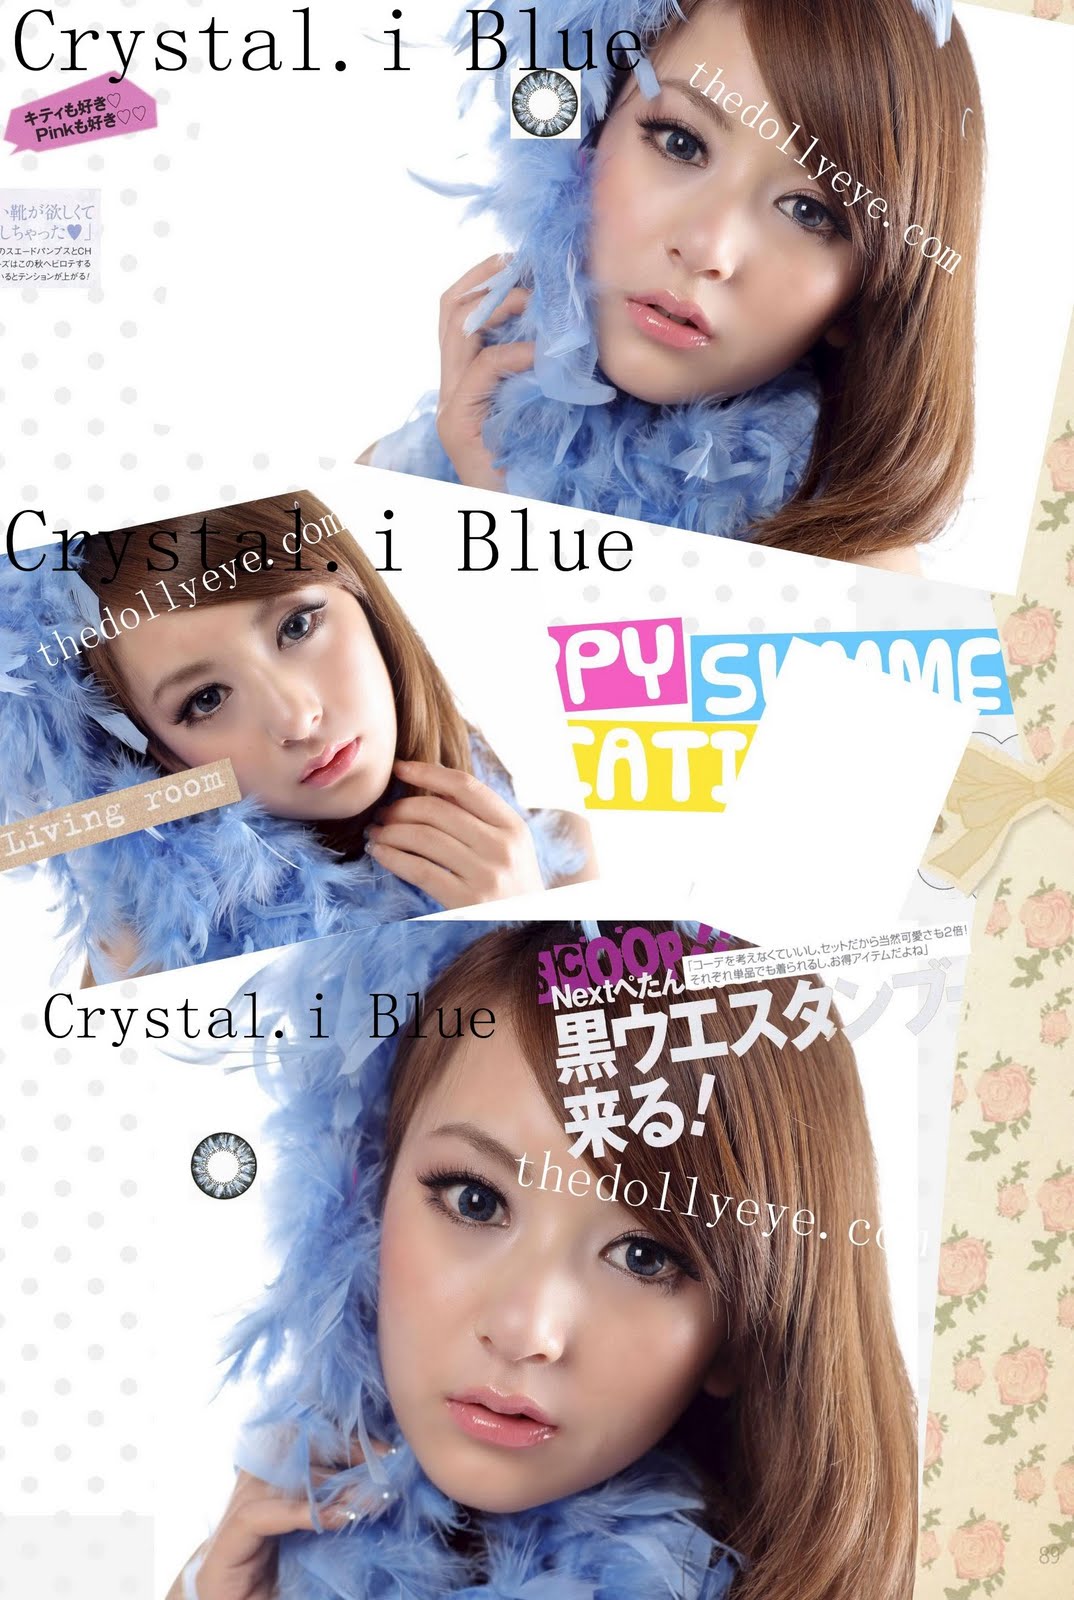 4.bp.blogspot.com/-xU_BY9B_Rpg/TkXk7-dAvSI/AAAAAAAACnM/W0F1n53uUuA/s1600/Crystal.i+Blue.jpg